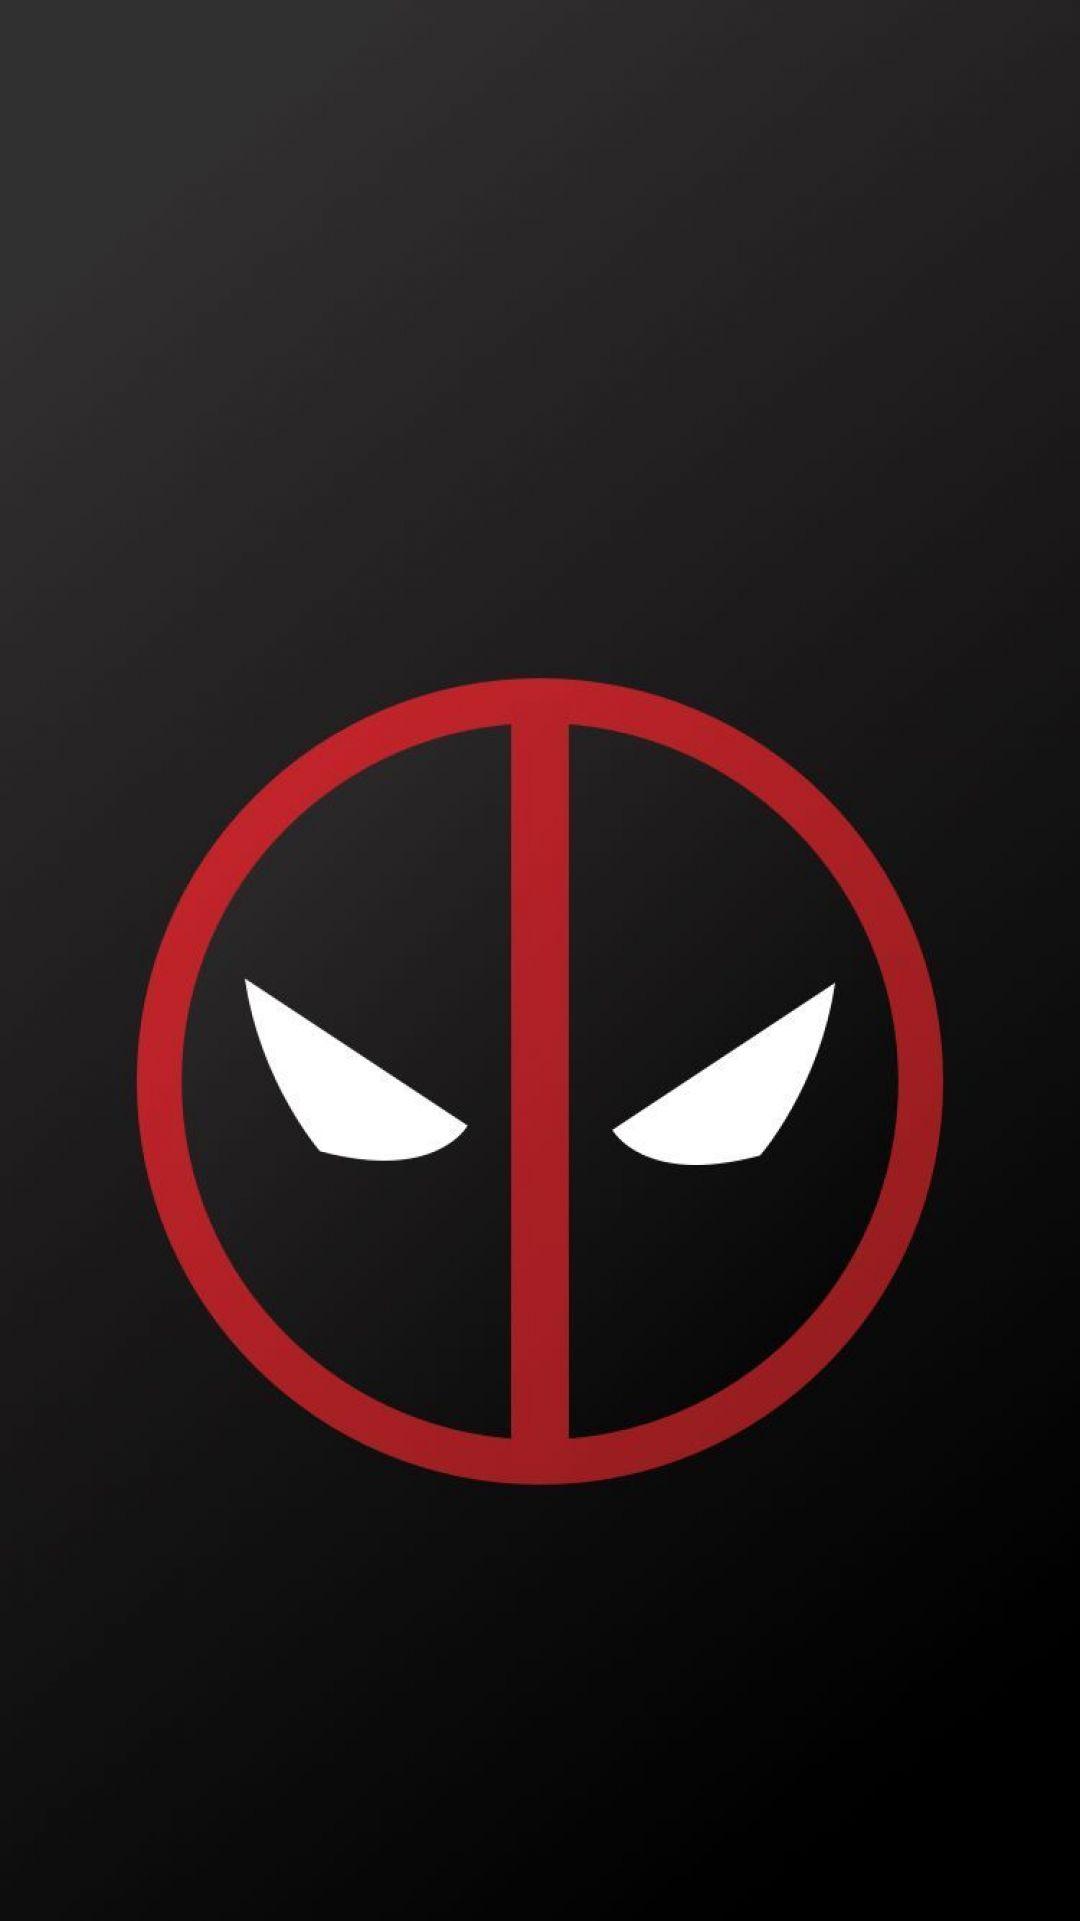 Deadpool Marvel Comic Book, iPhone